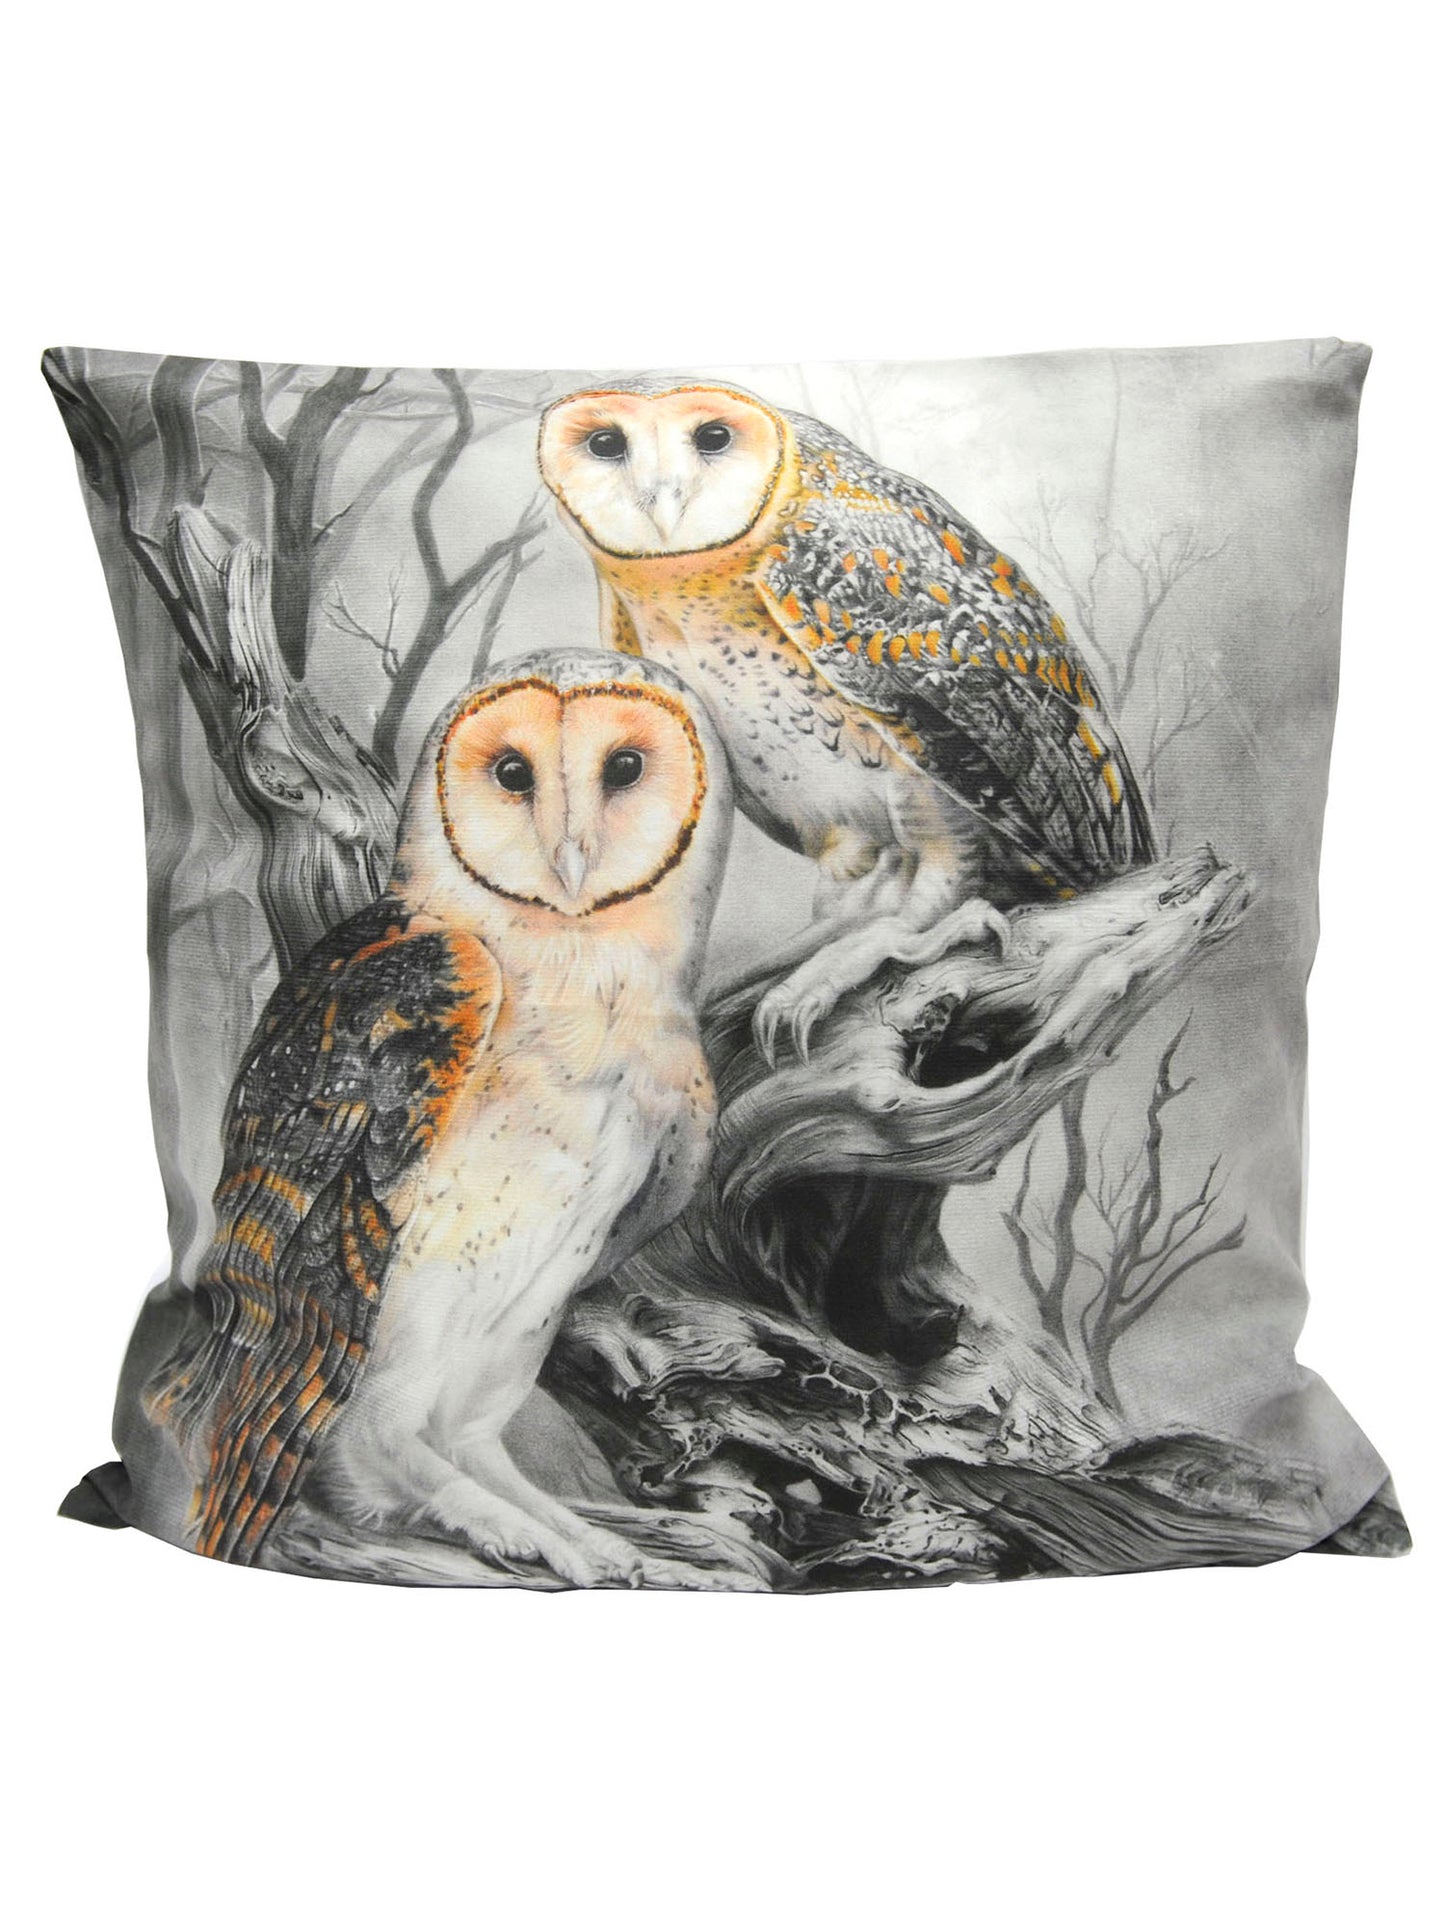 Cushion cover featuring 'Tasmanian Masked Owls' artwork